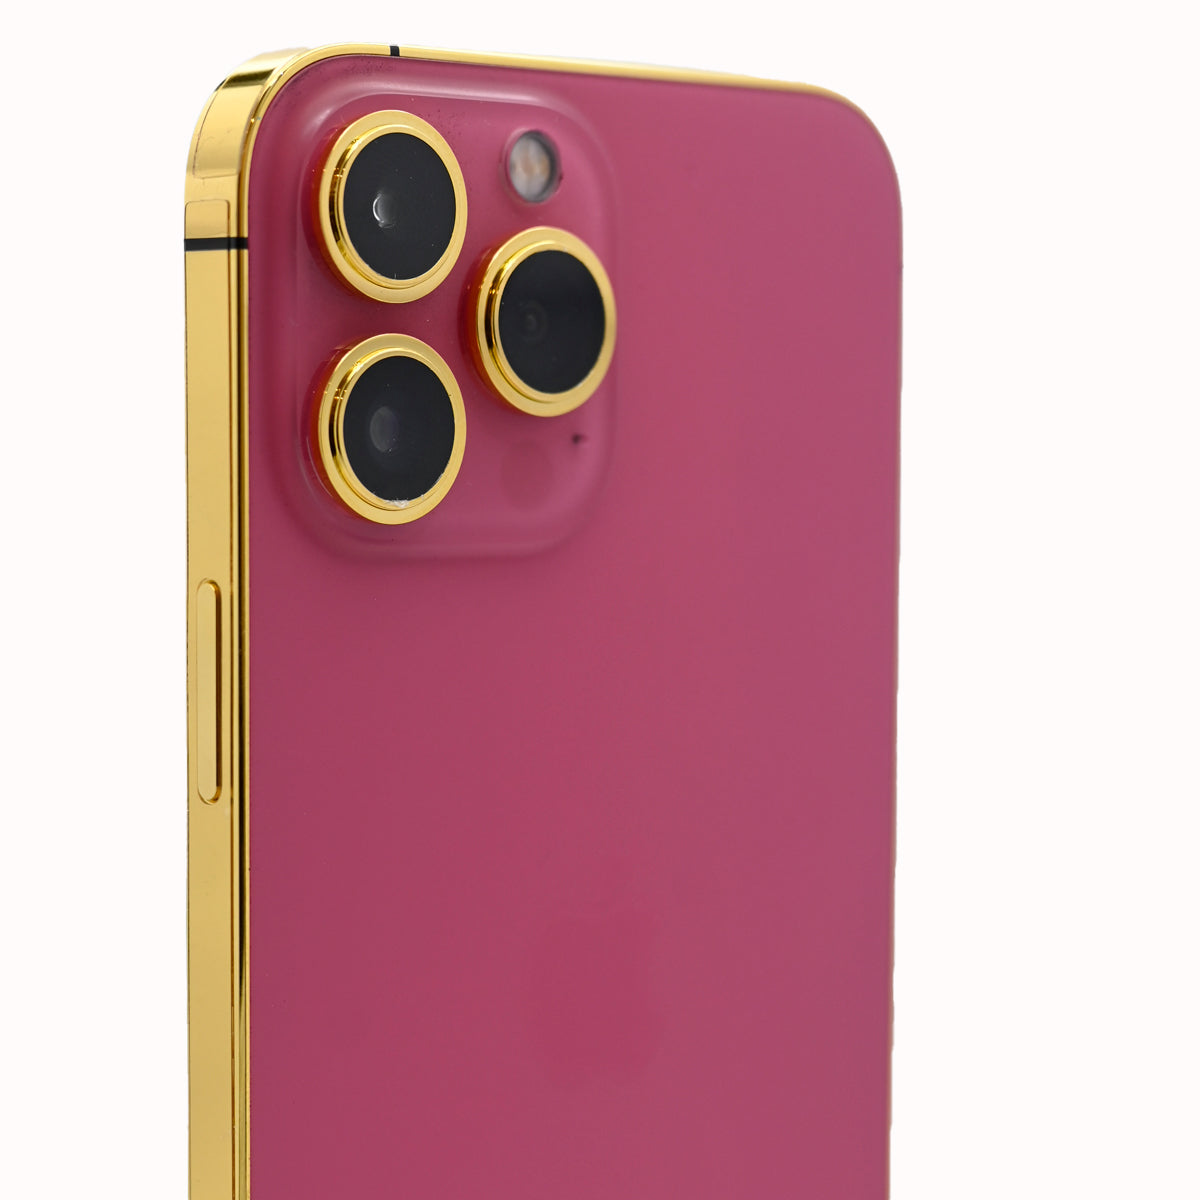 Caviar Luxury 24k Gold Frame Customized iPhone 13 Pro Max 256 GB, Pink